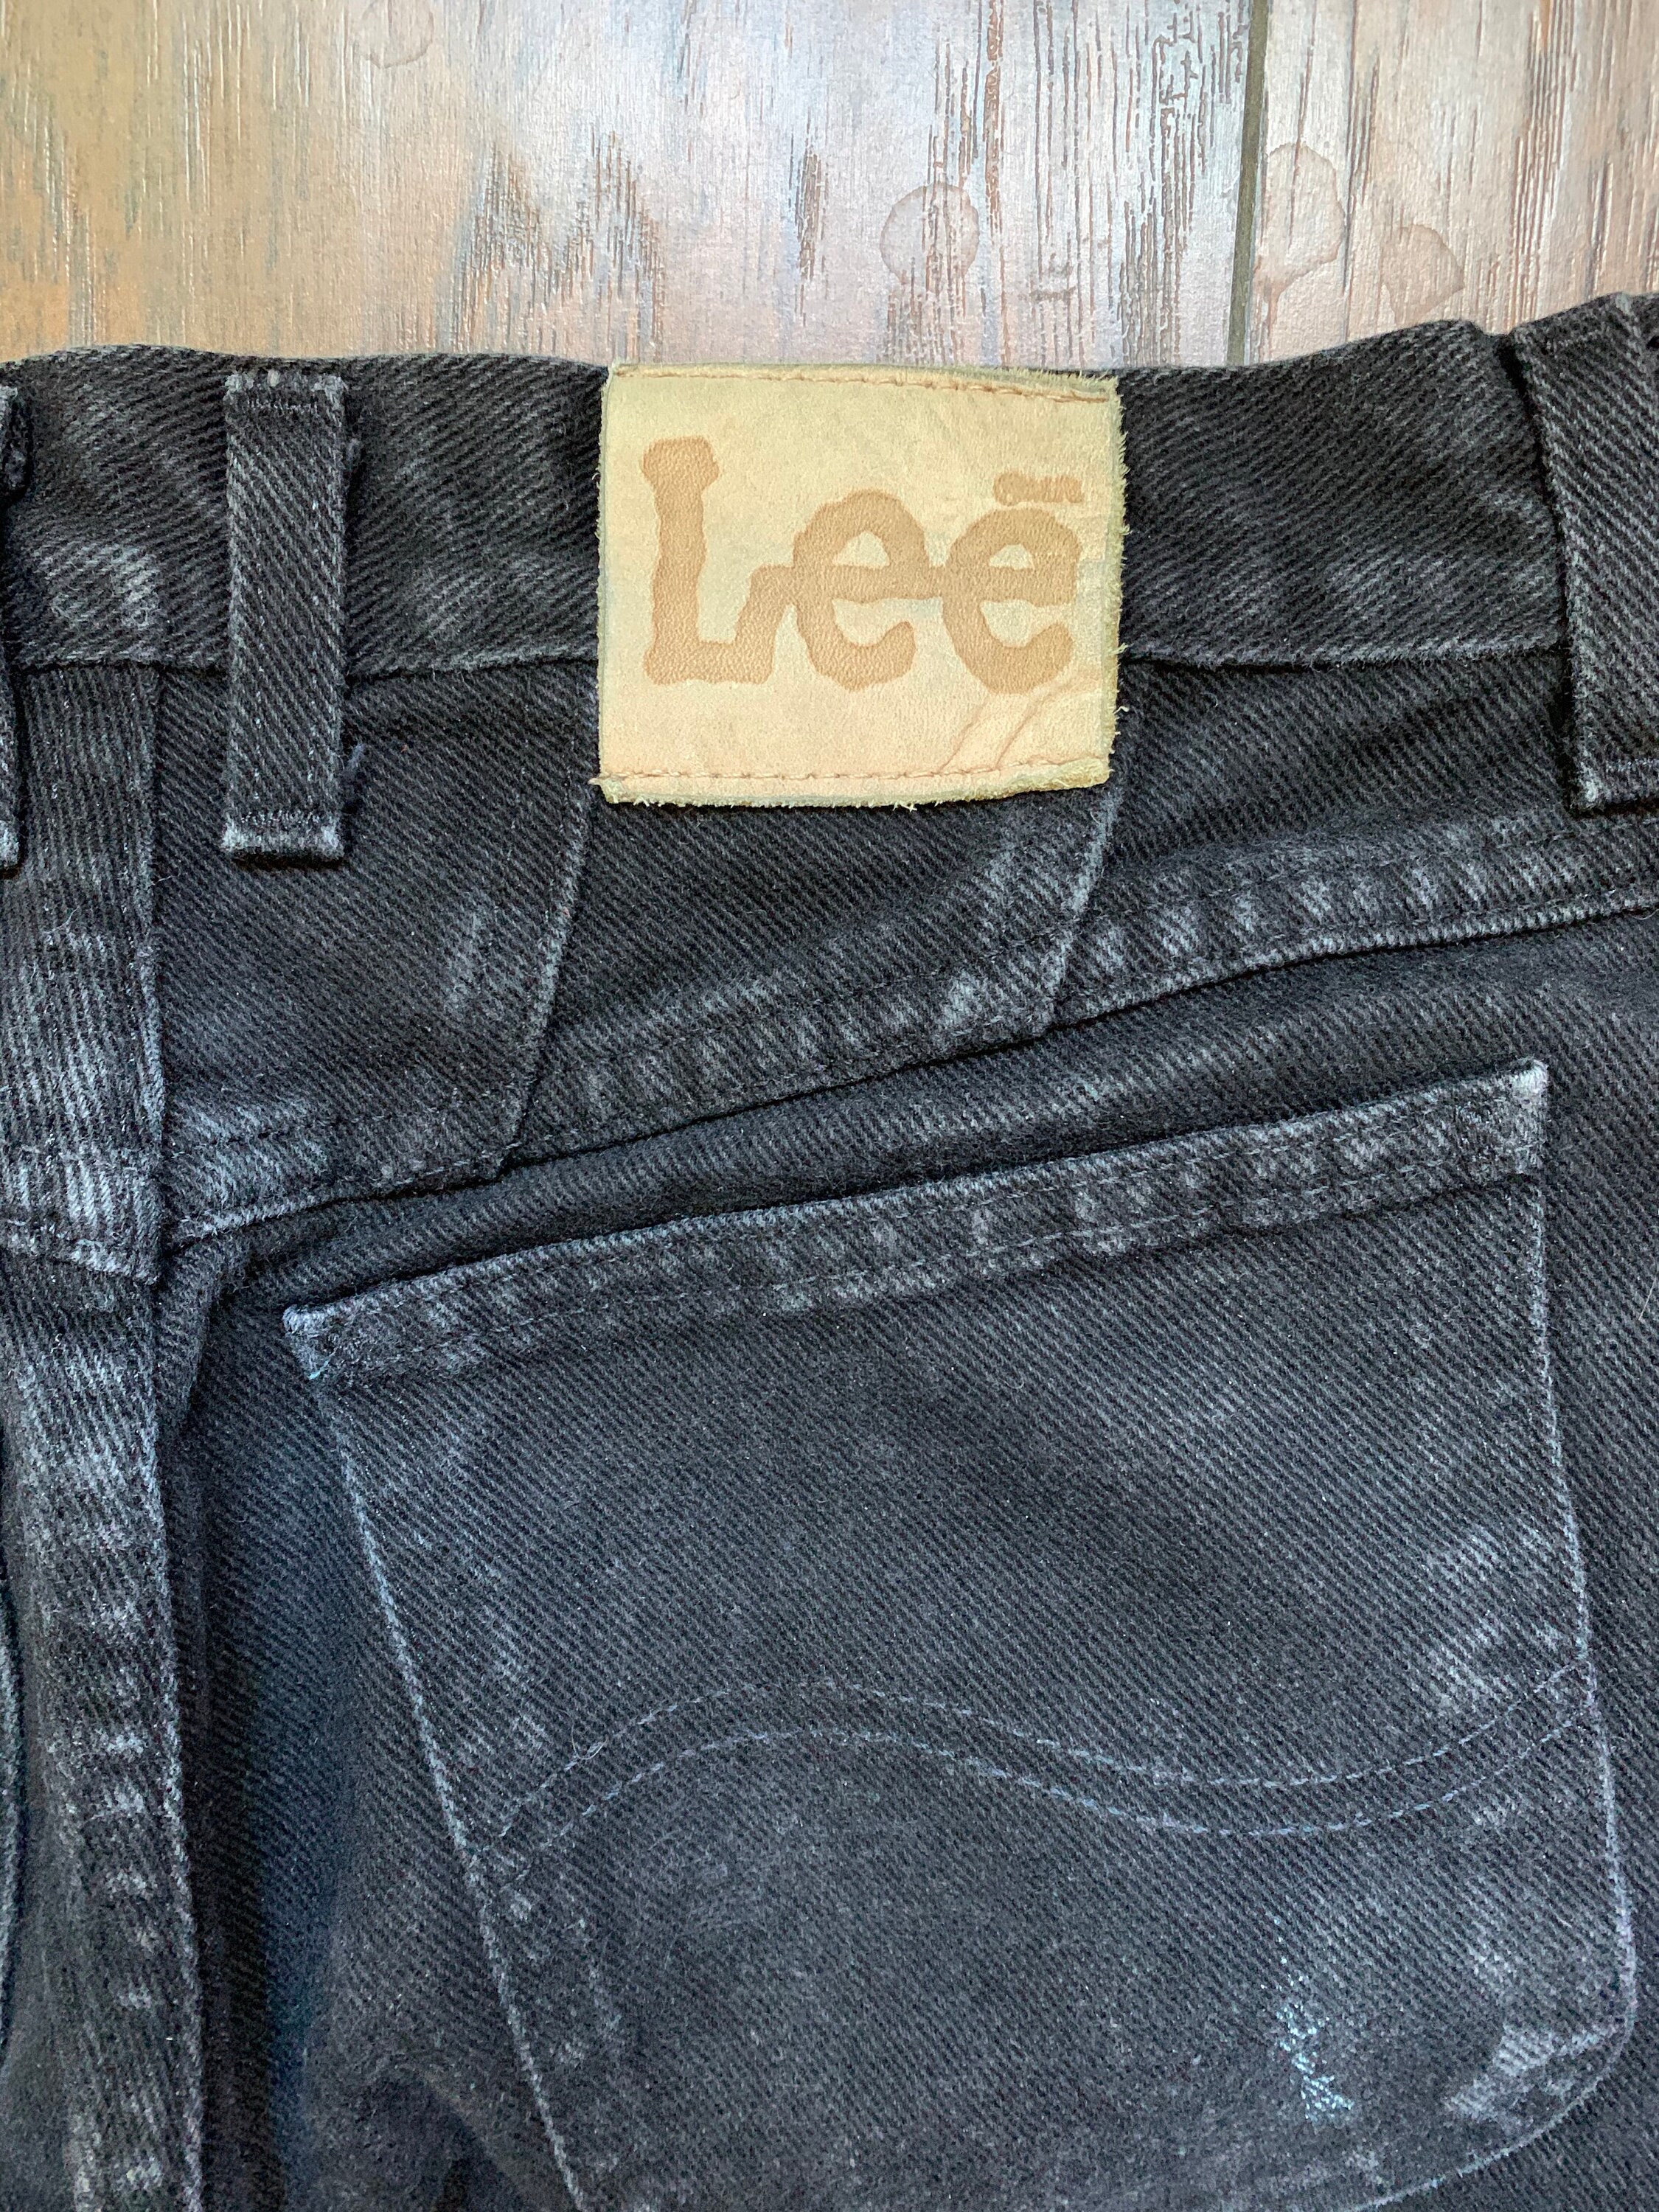 Vintage Jeans High Waisted Mom Jean Black Lee | Etsy